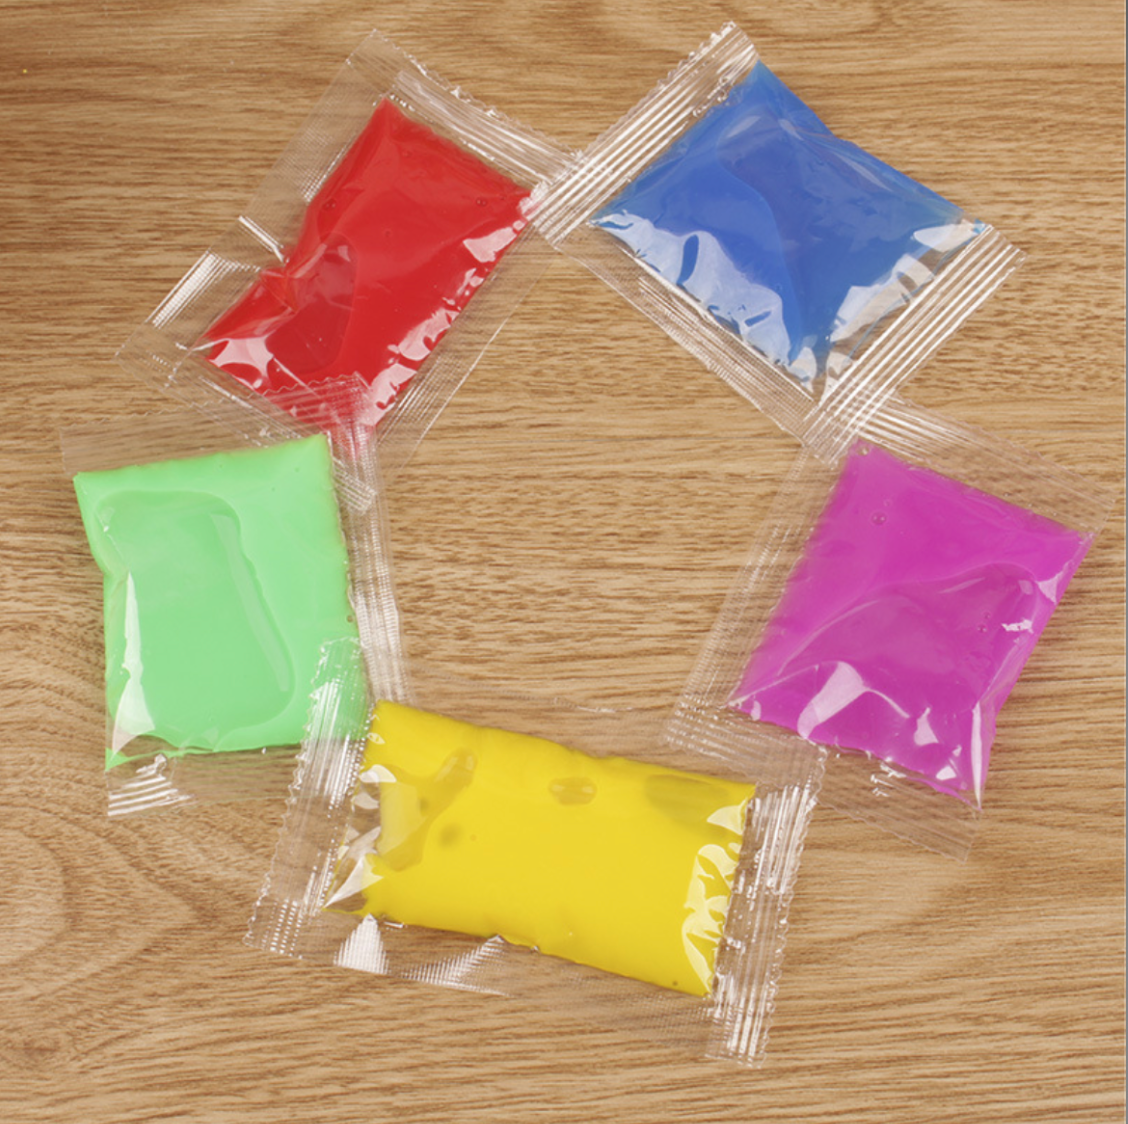 Additional Non-Stick Slime Packs